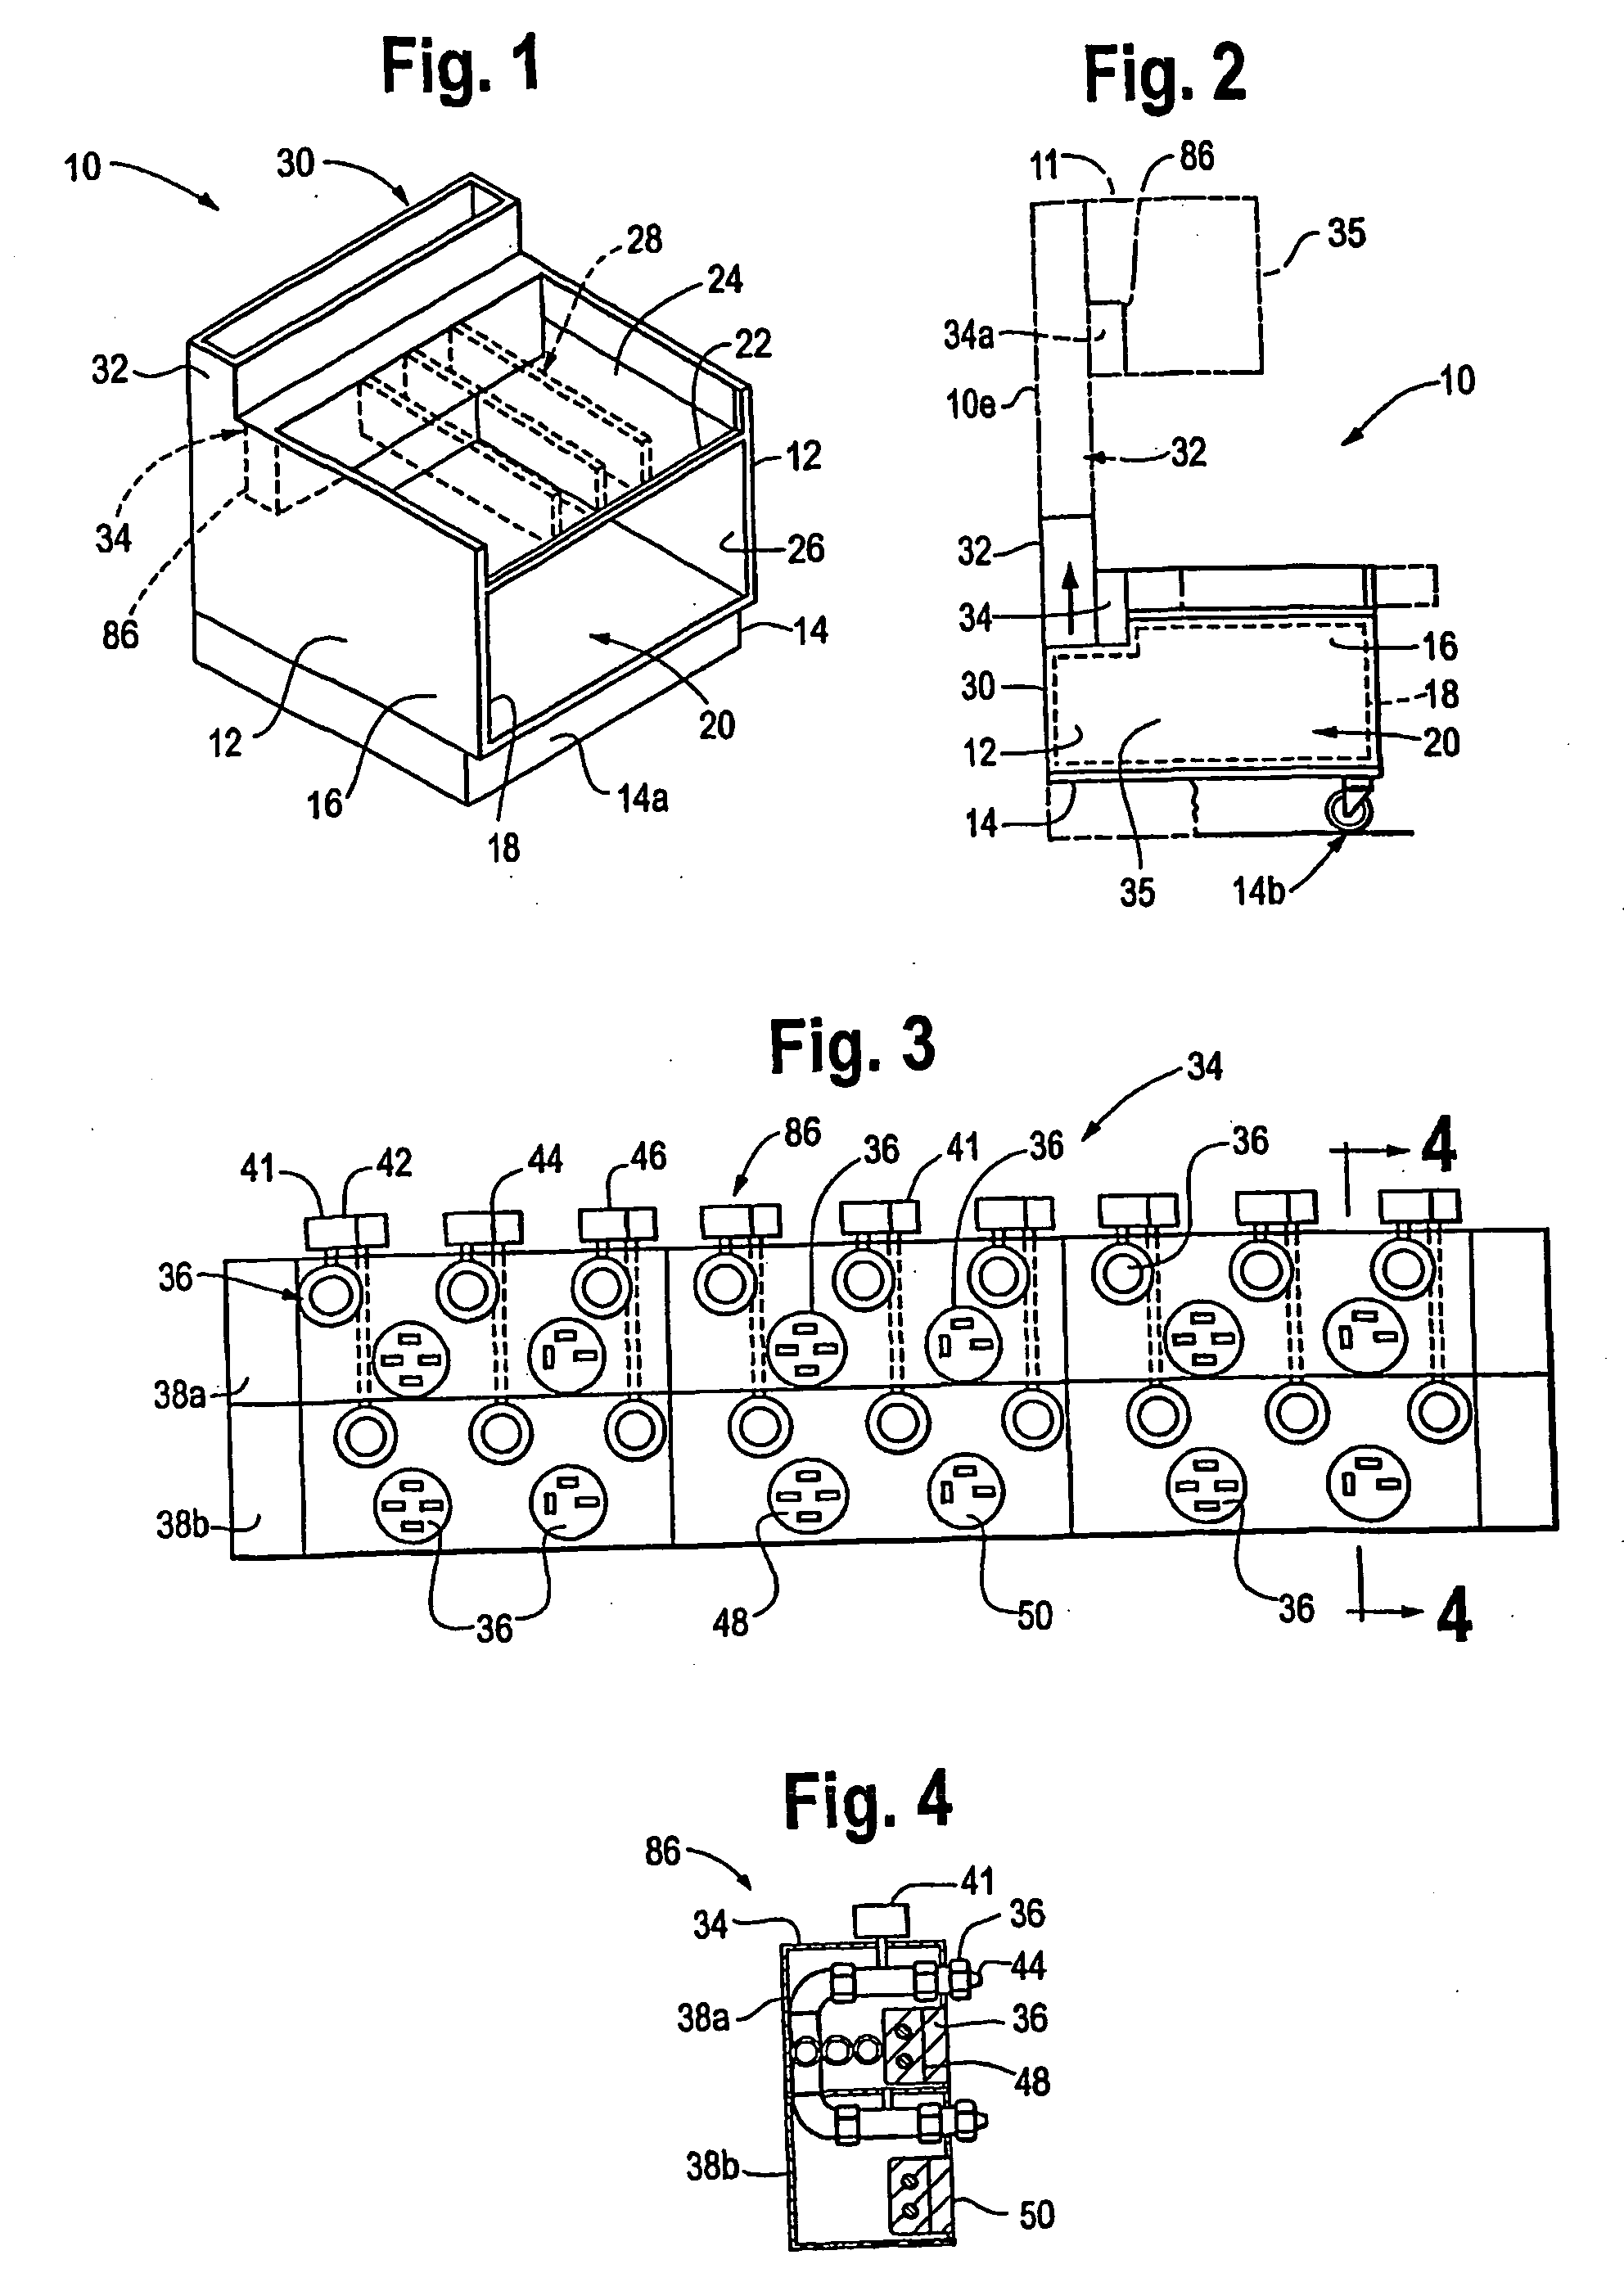 Modular reconfigurable appliance